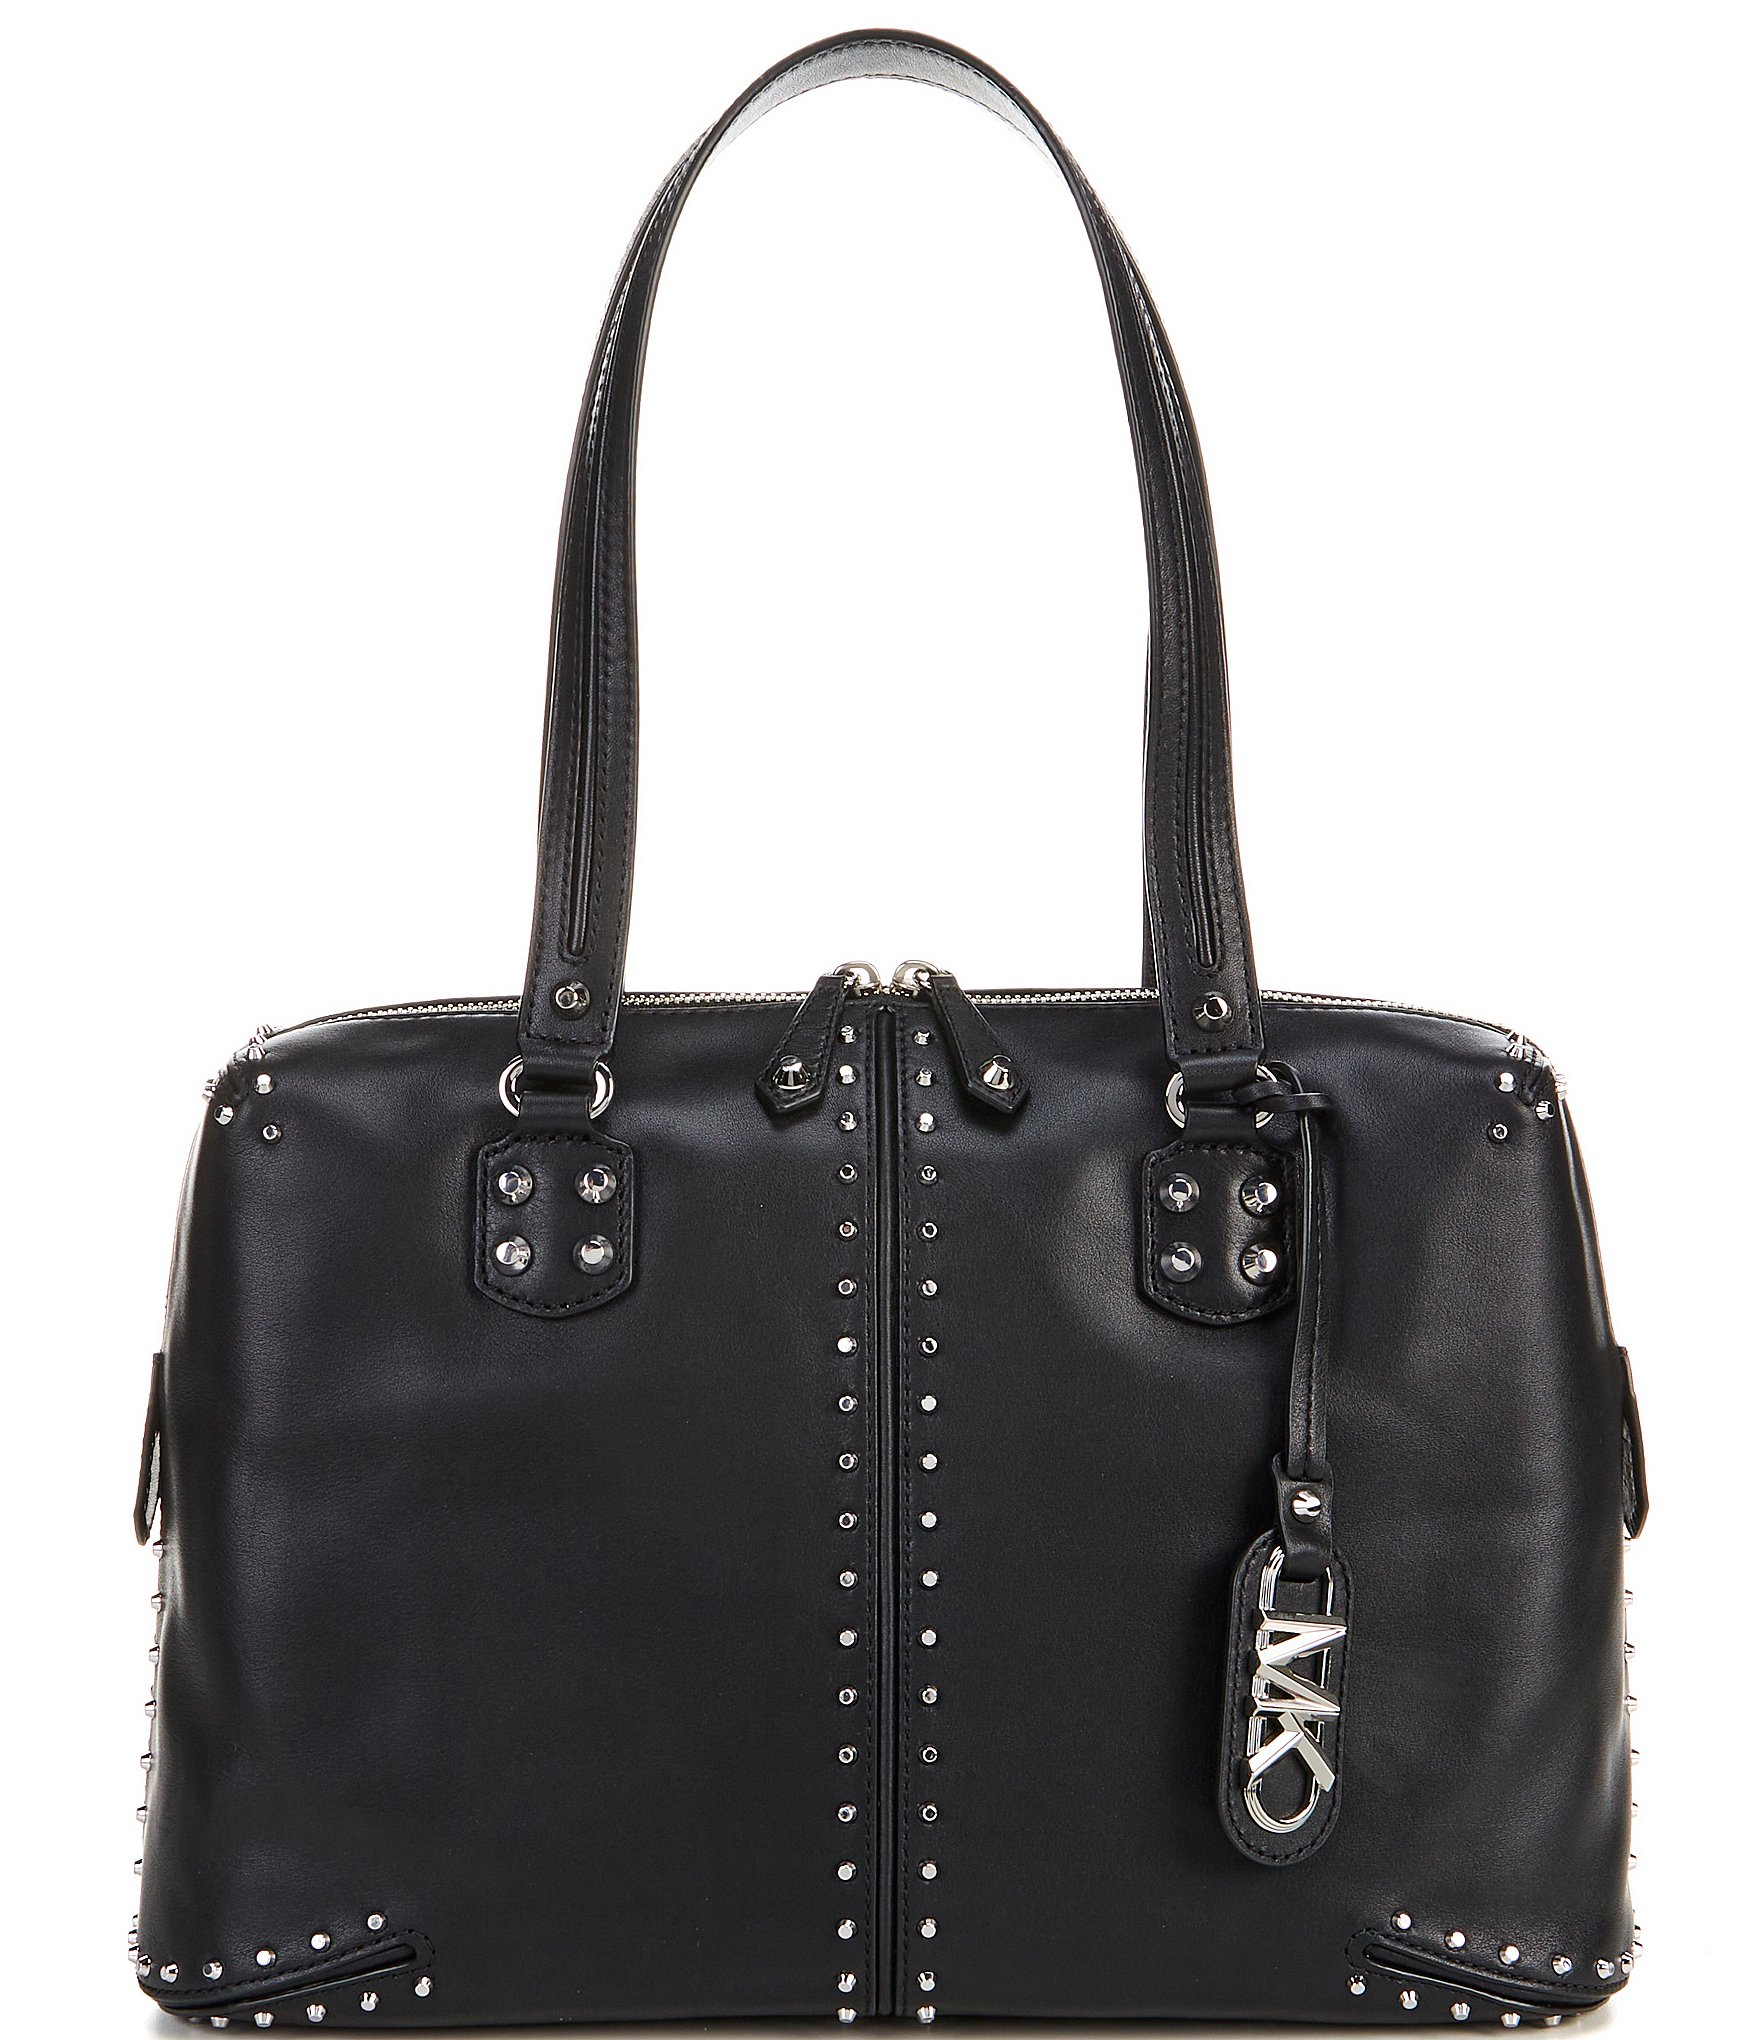 Michael Kors Black Leather Handbag